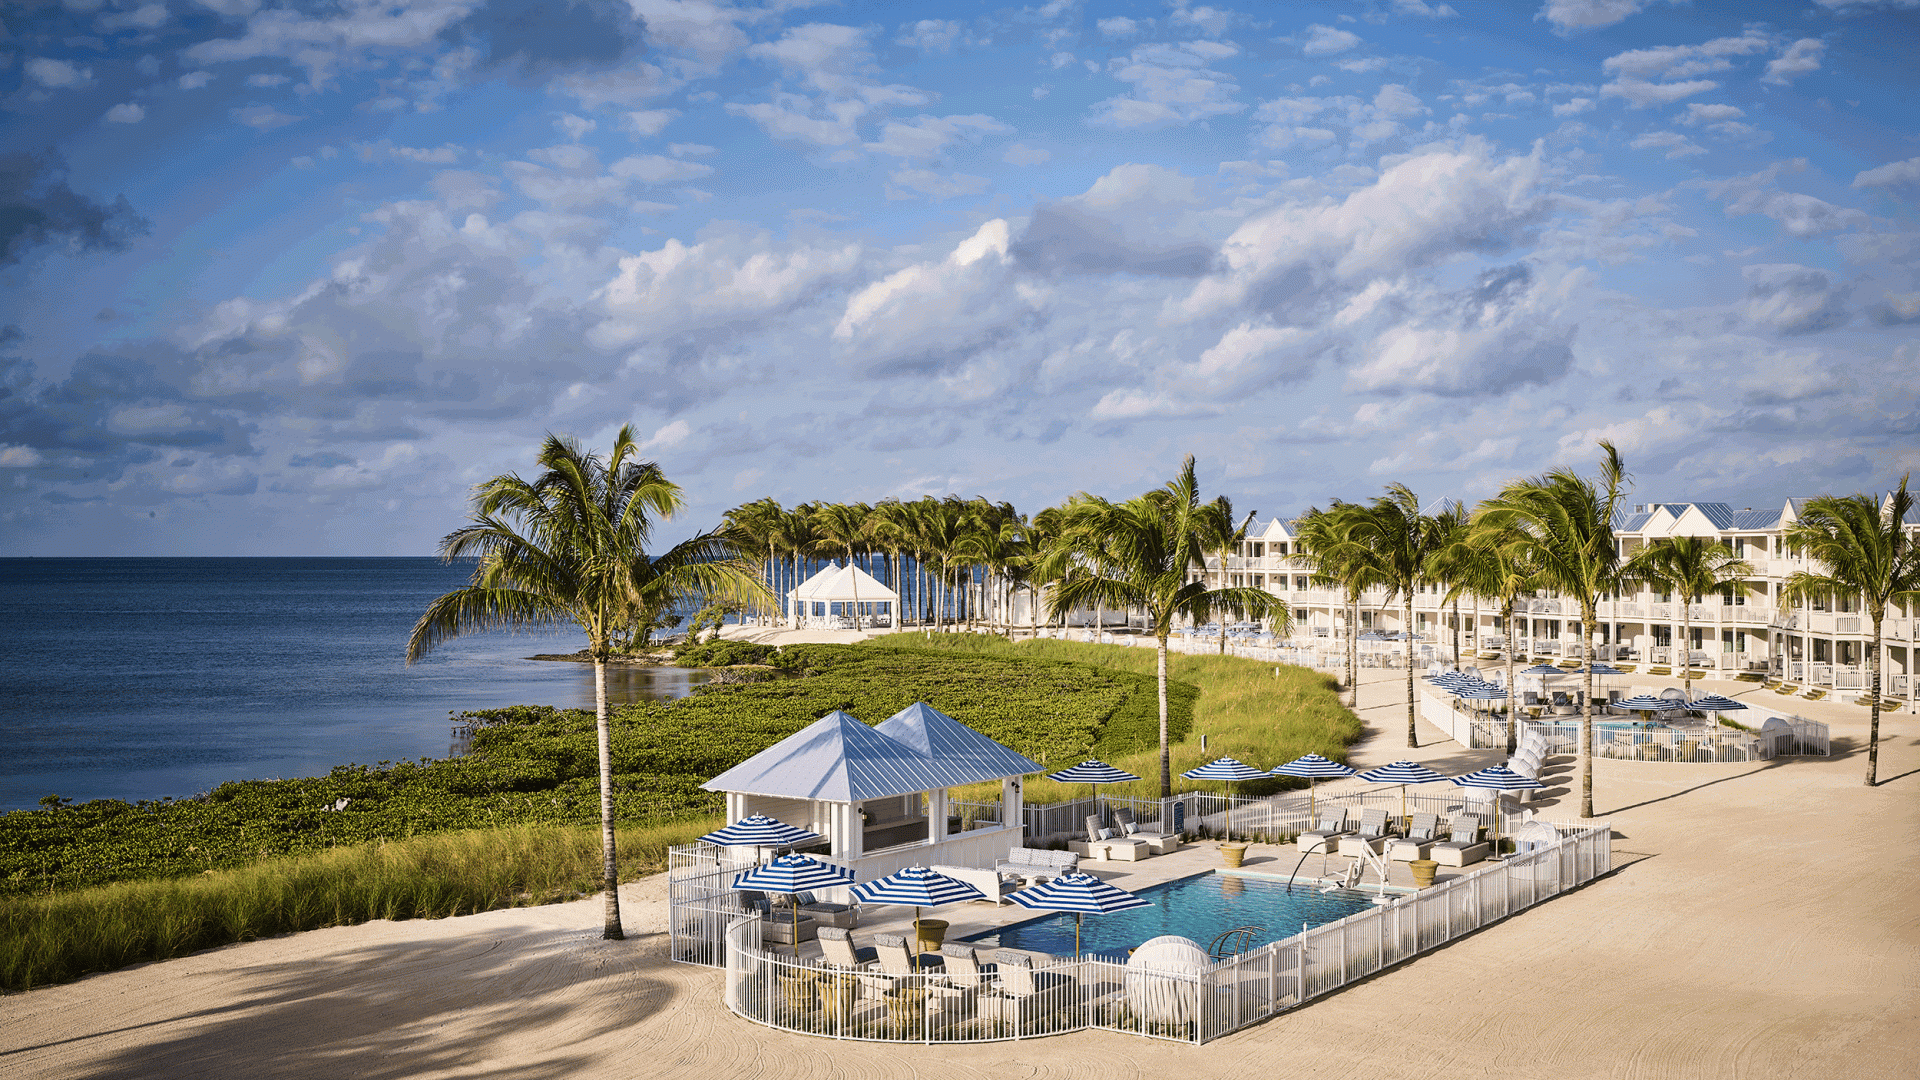 New Beach Resort in the Florida Keys   Isla Bella Beach Resort & Spa